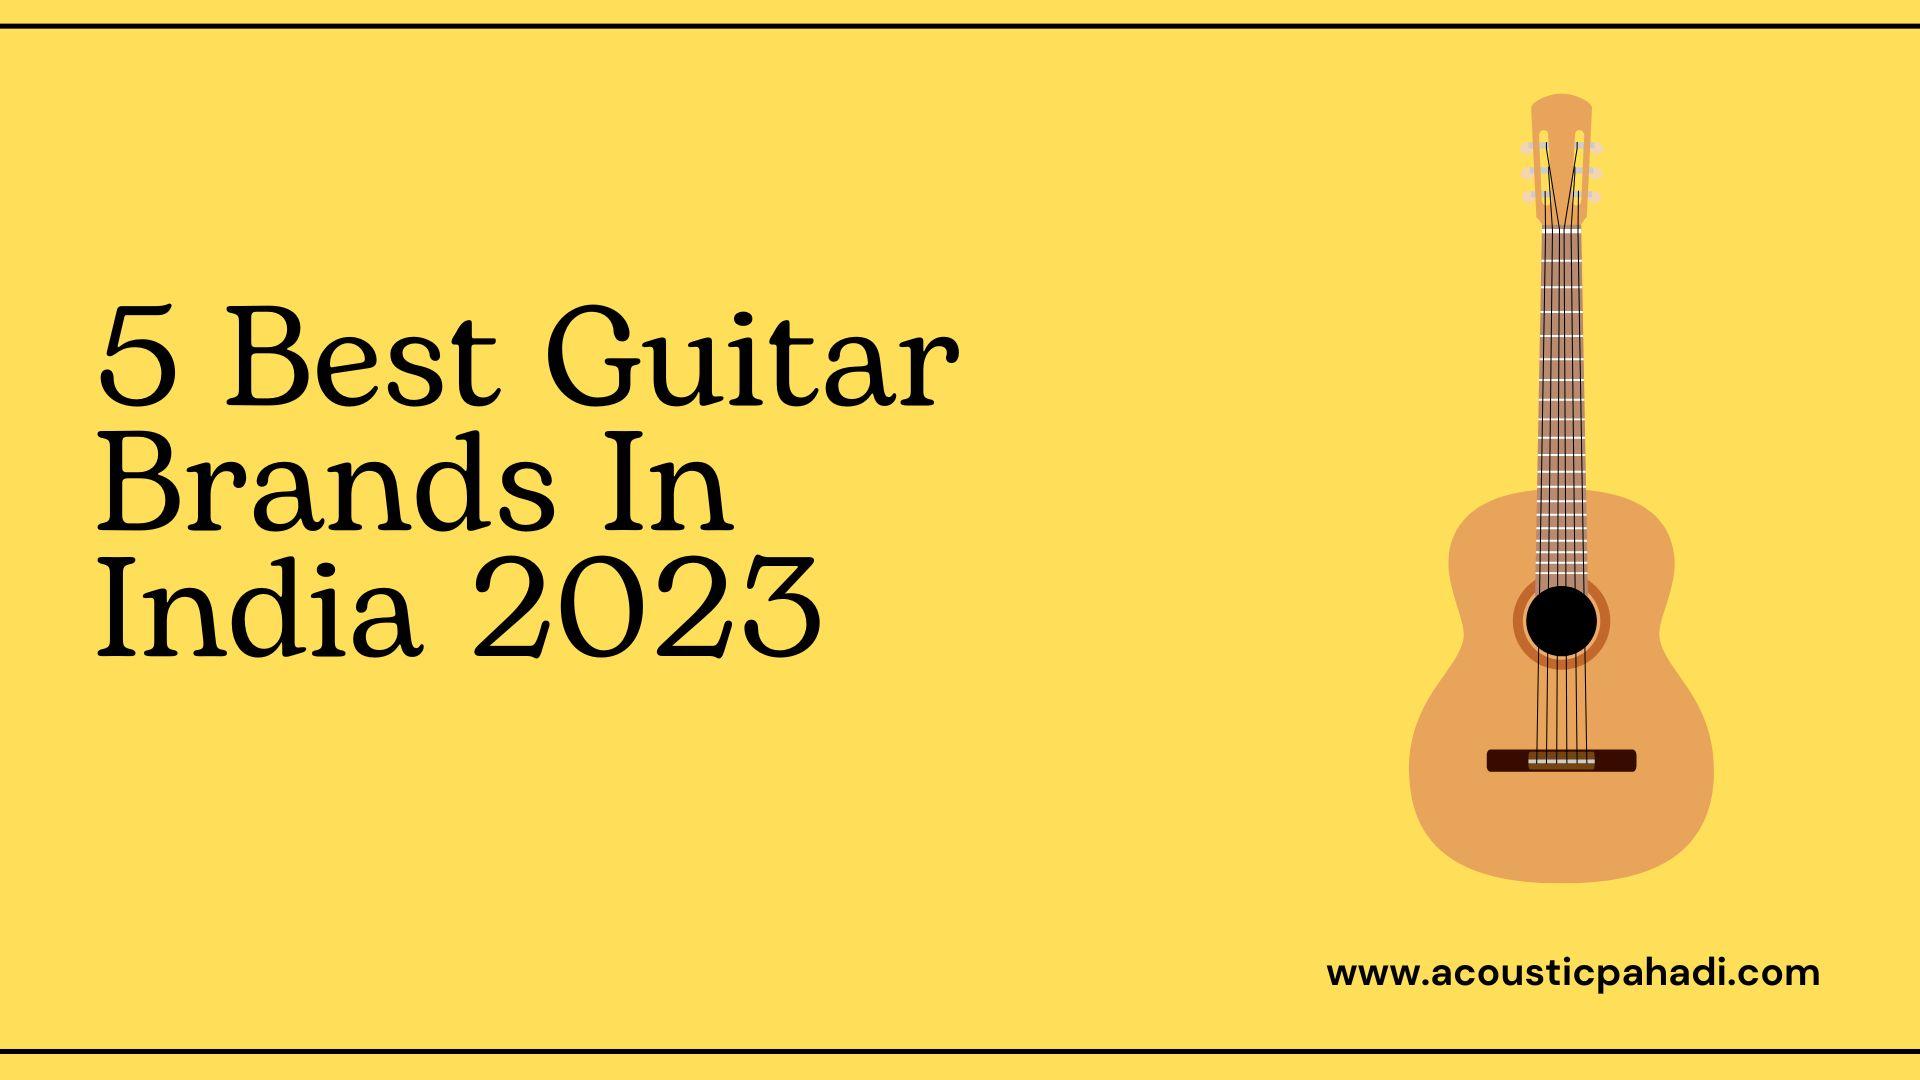 5 Best Guitar Brands In India 2023